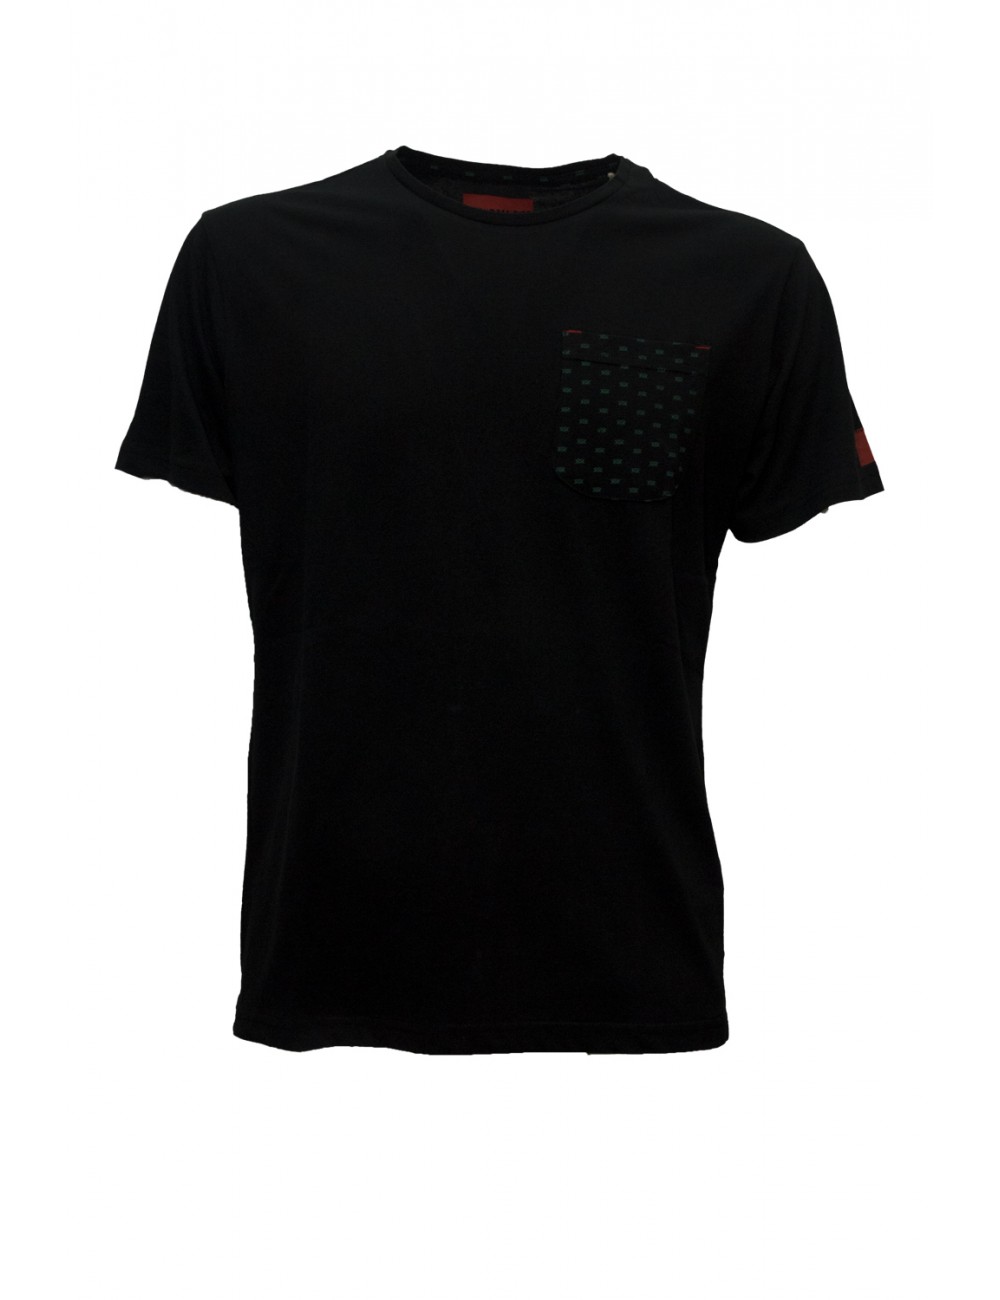 t-shirt censured UOMO BLACK - TM 3979 T JETE 90 vista frontale